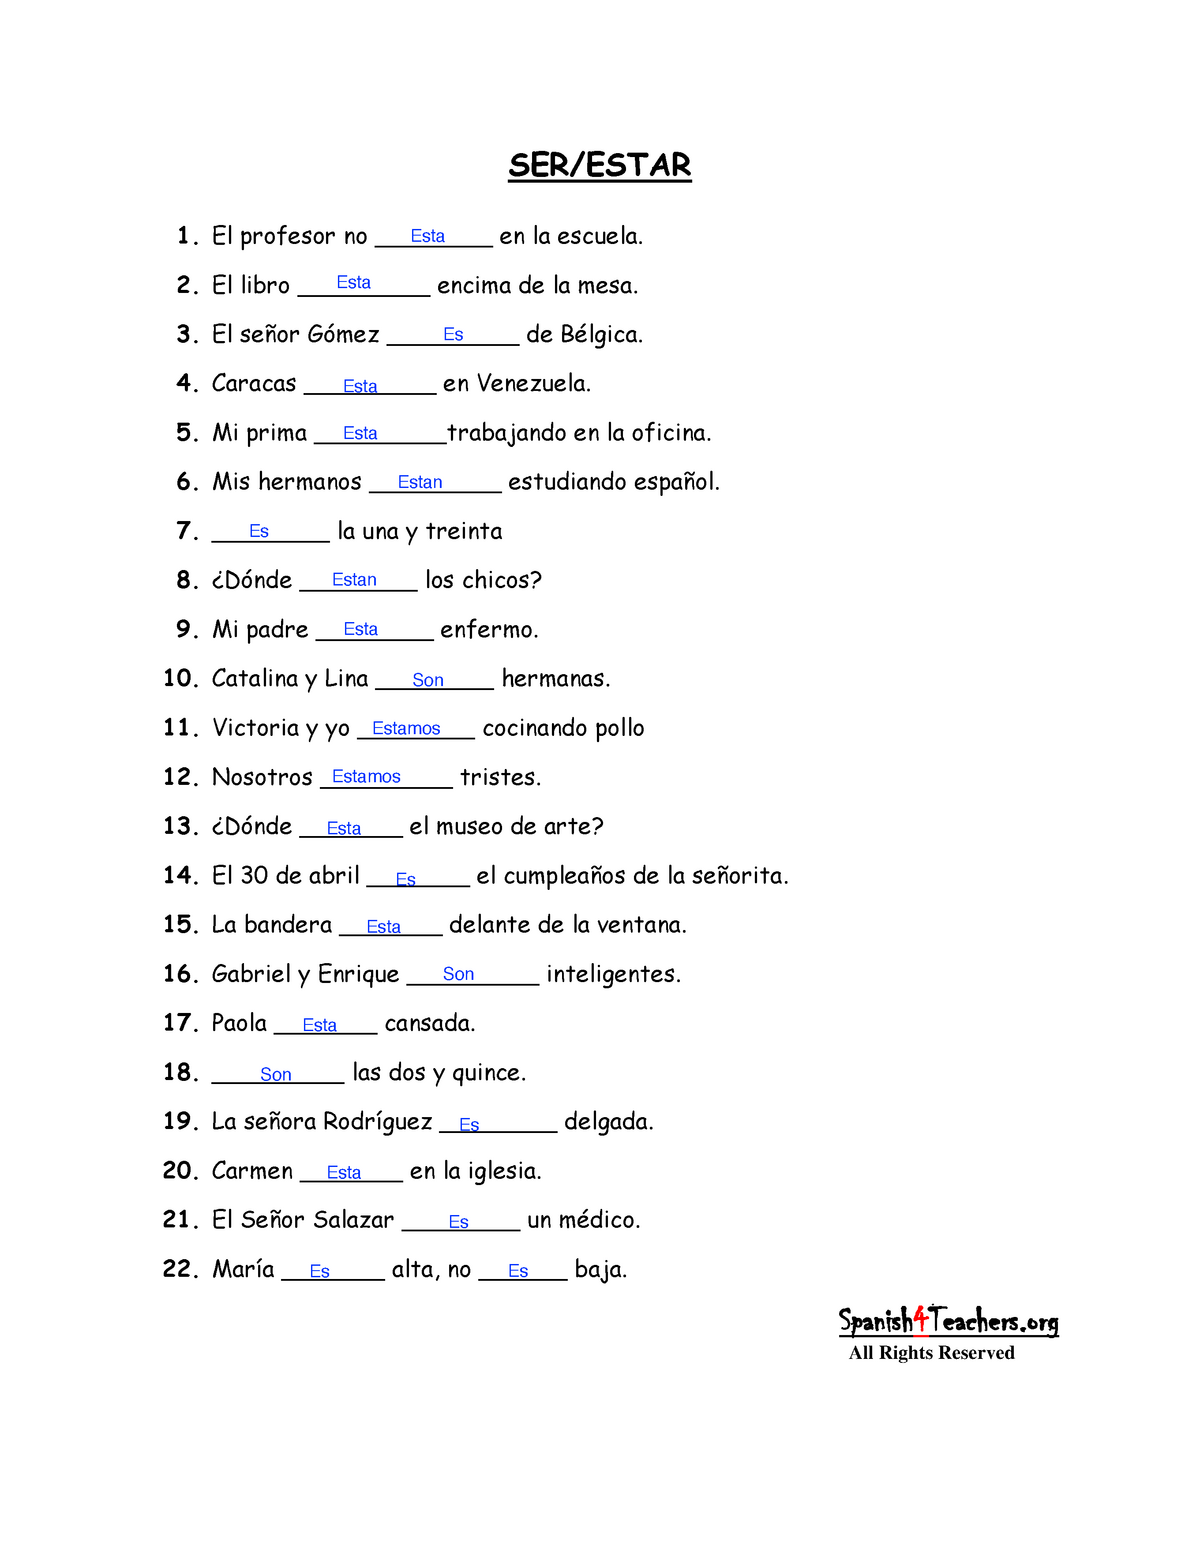 Spanish Ser Estar Worksheet - SPAN 20 - StuDocu Throughout Ser And Estar Worksheet